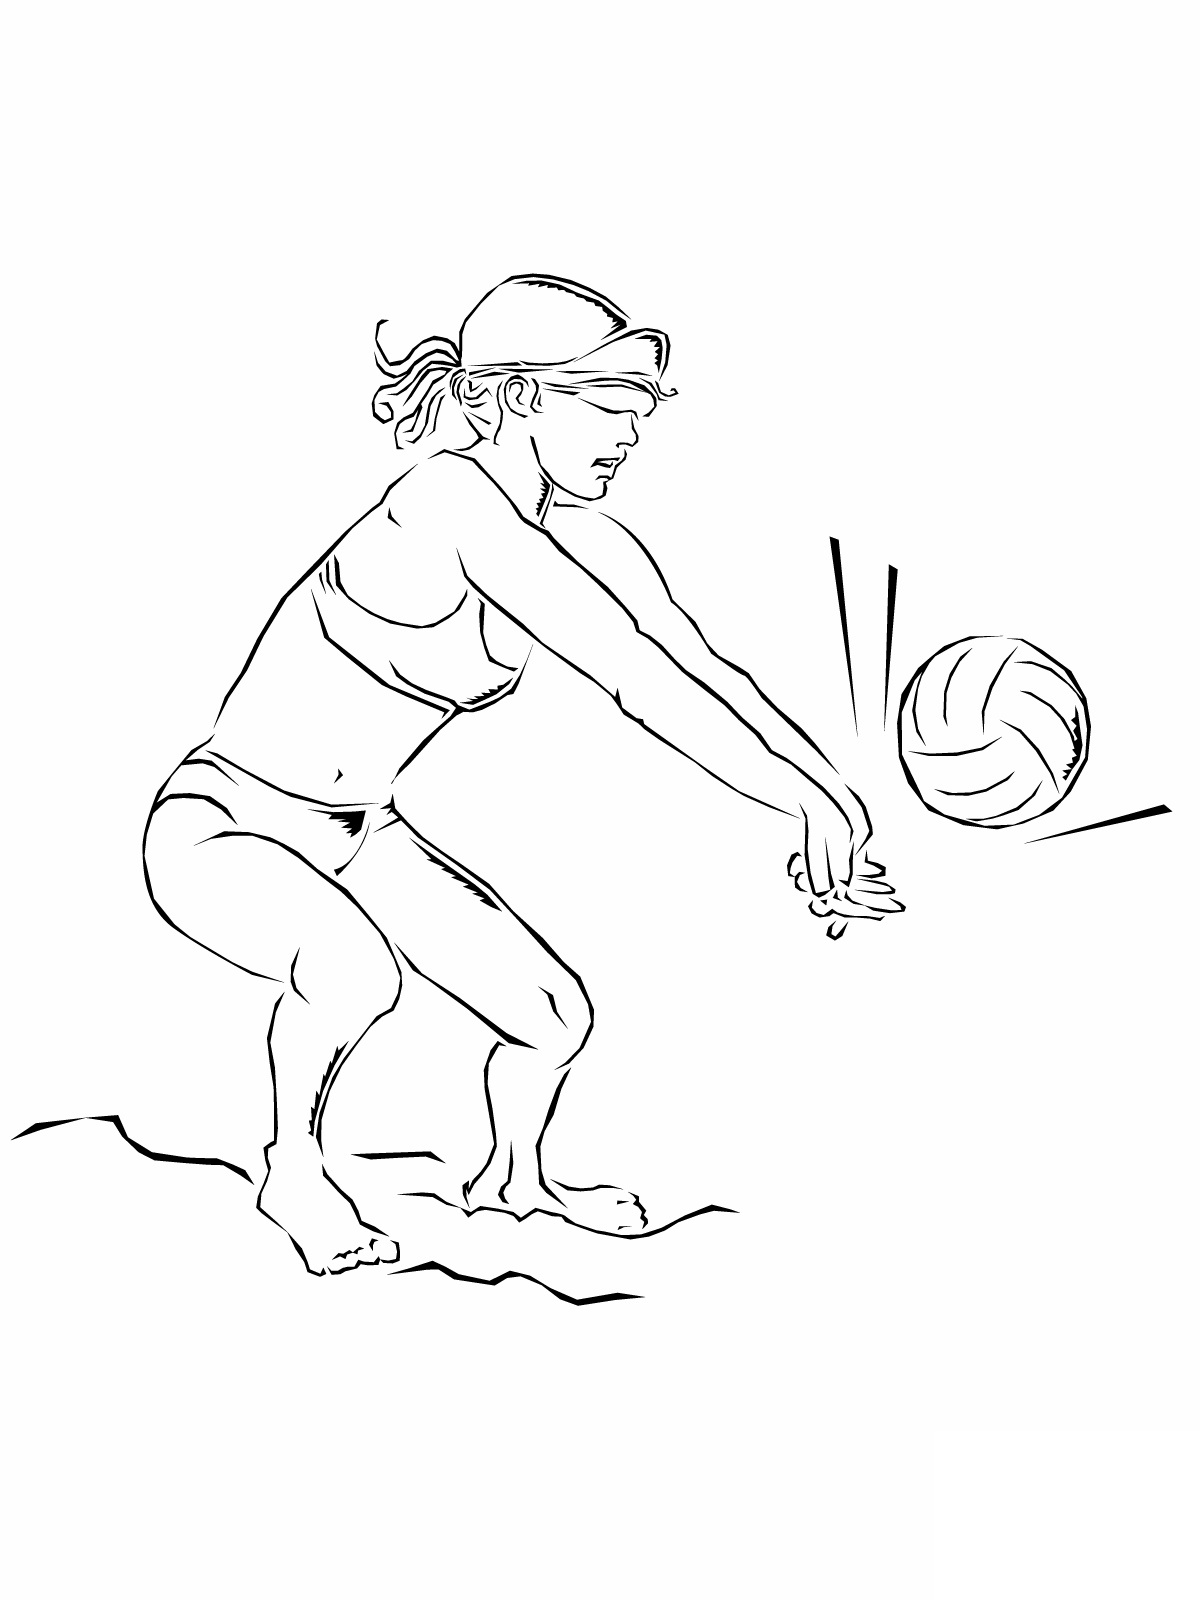 Рисунок волейболиста. Рисунок на тему волейбол. Раскраска волейбол. Рисунок на тему спорт карандашом. Волейболист рисунок карандашом.